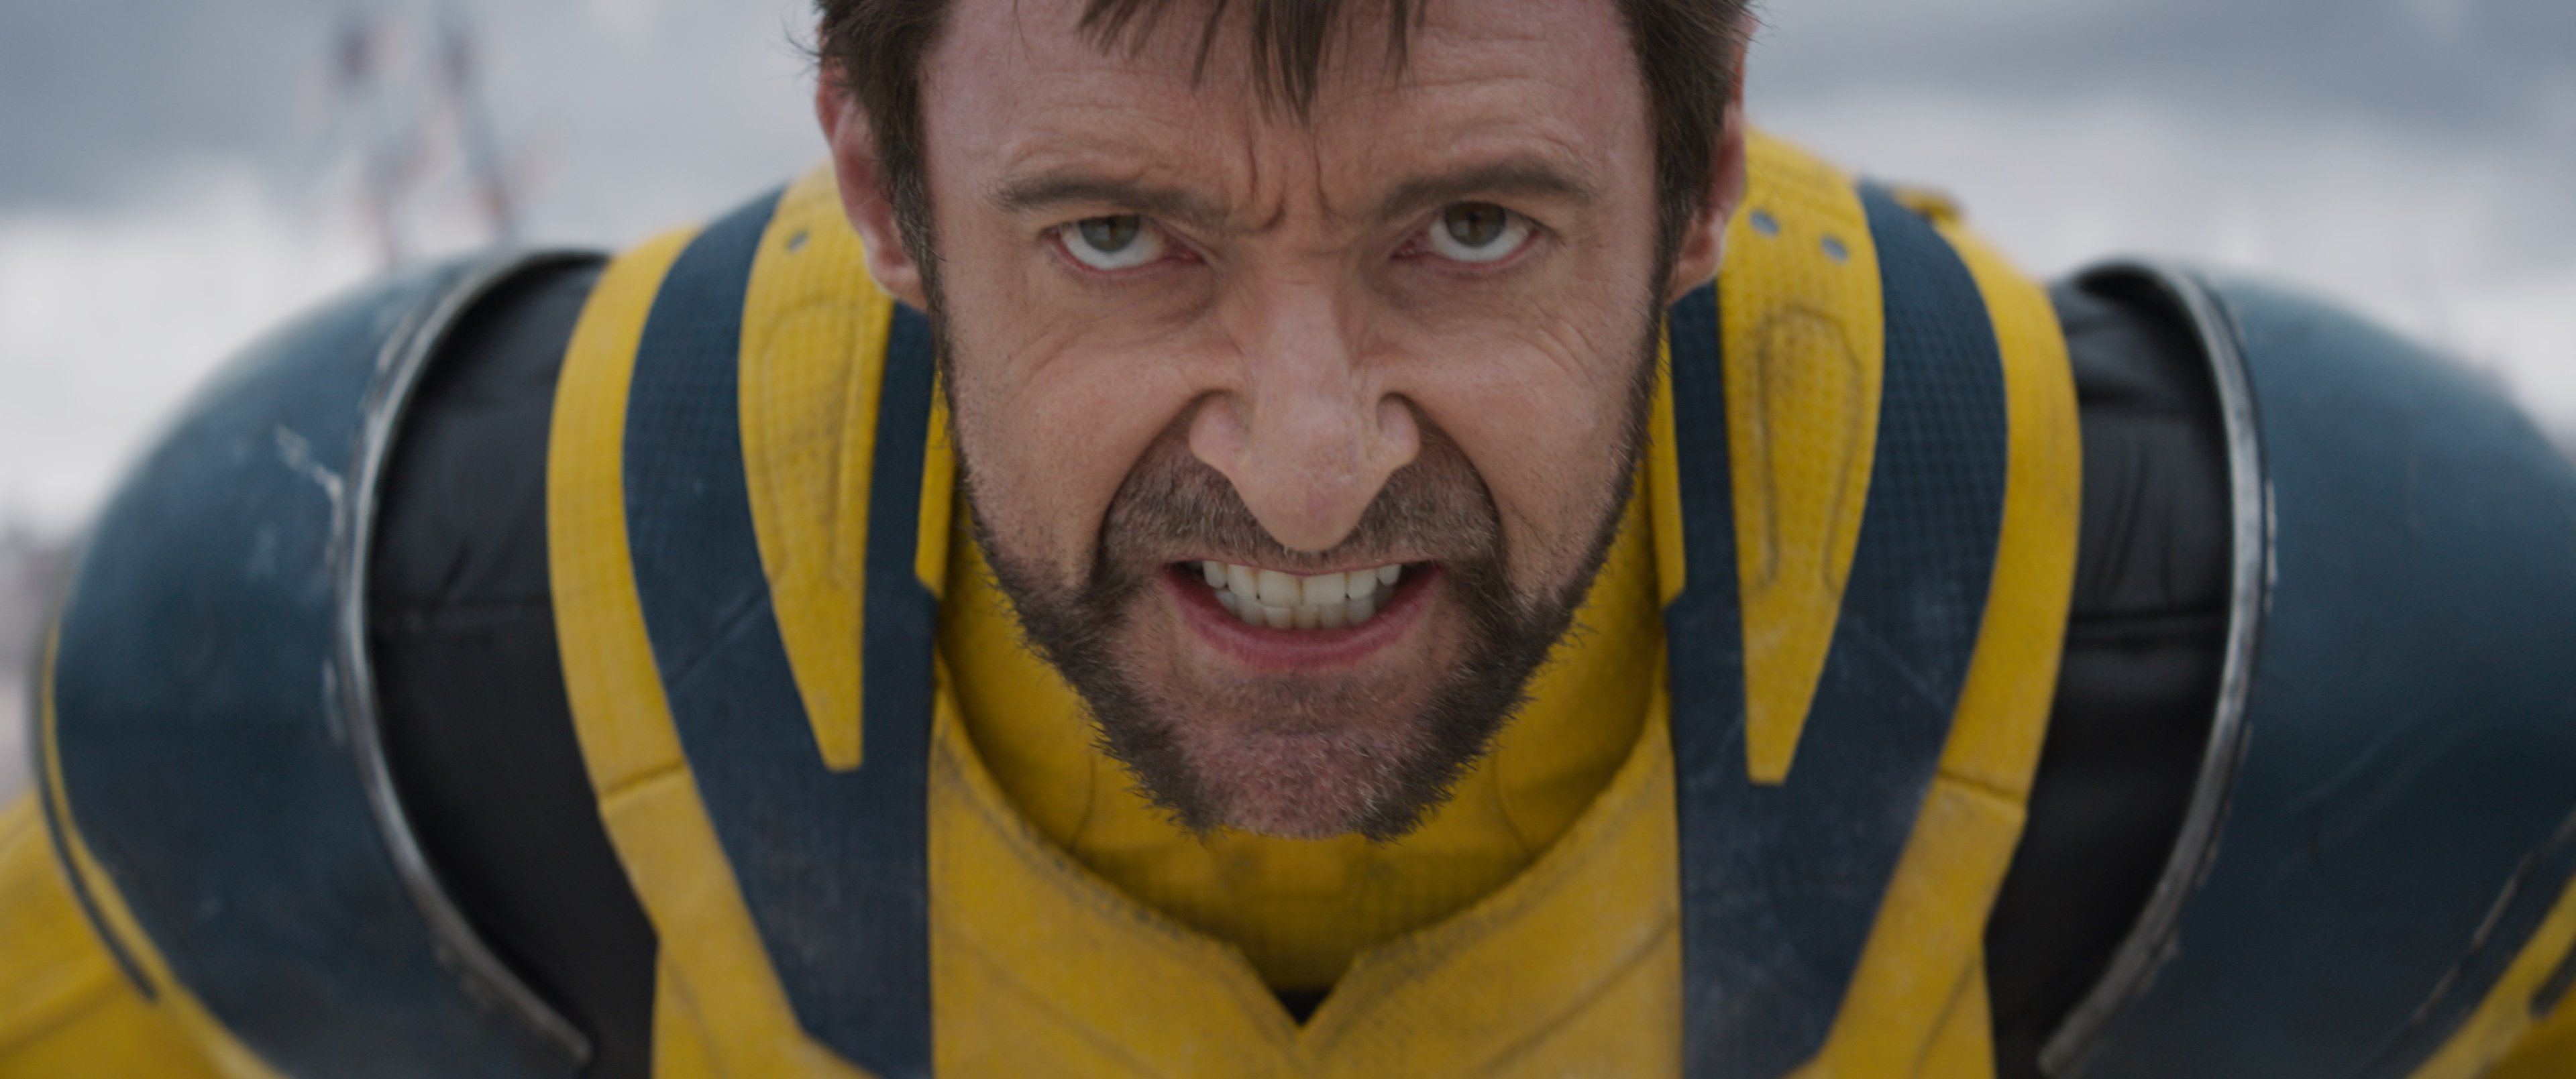 Hugh Jackman como Wolverine/Logan em "Deadpool & Wolverine"